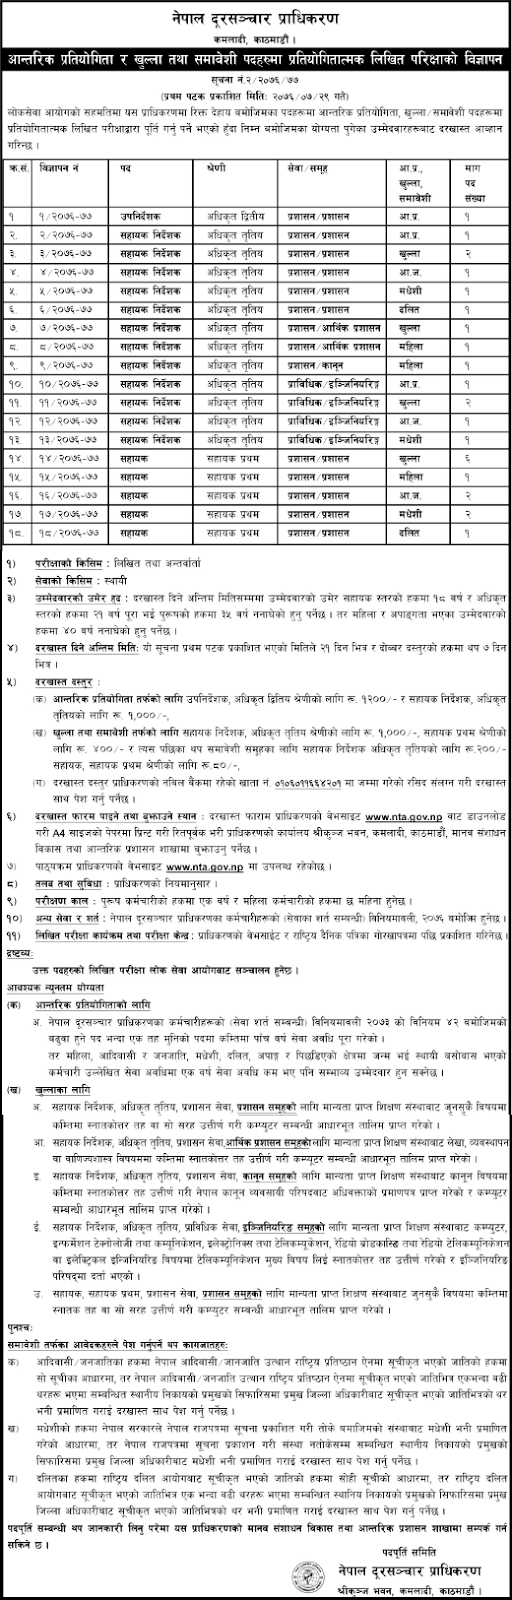 Nepal Telecommunications Authority (NTA) Vacancy Announcement